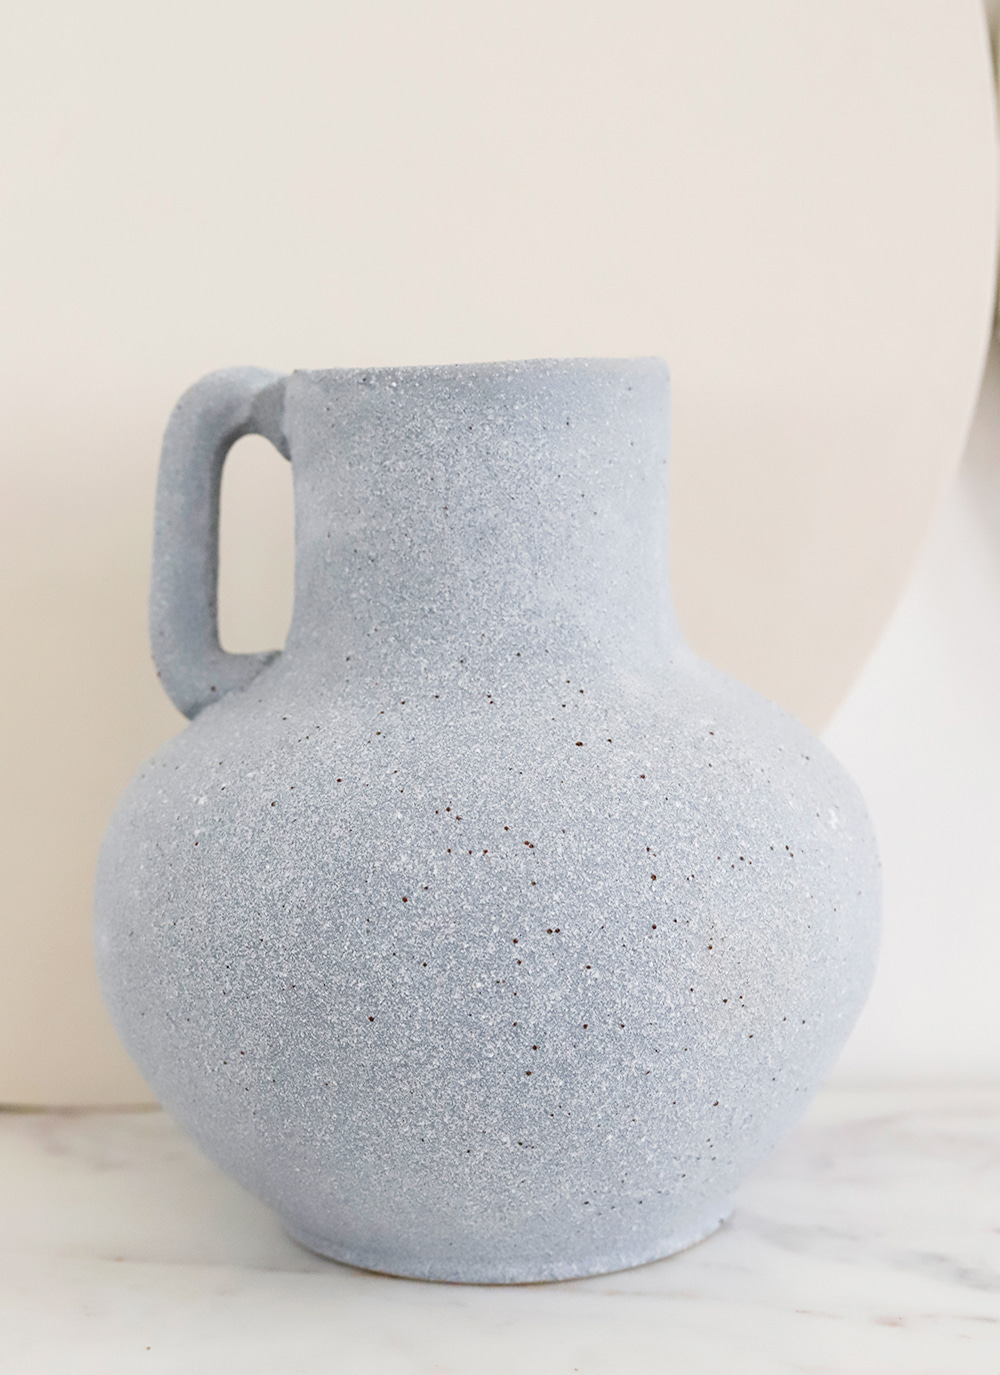 ELDEY pot, 1 handle, light blue